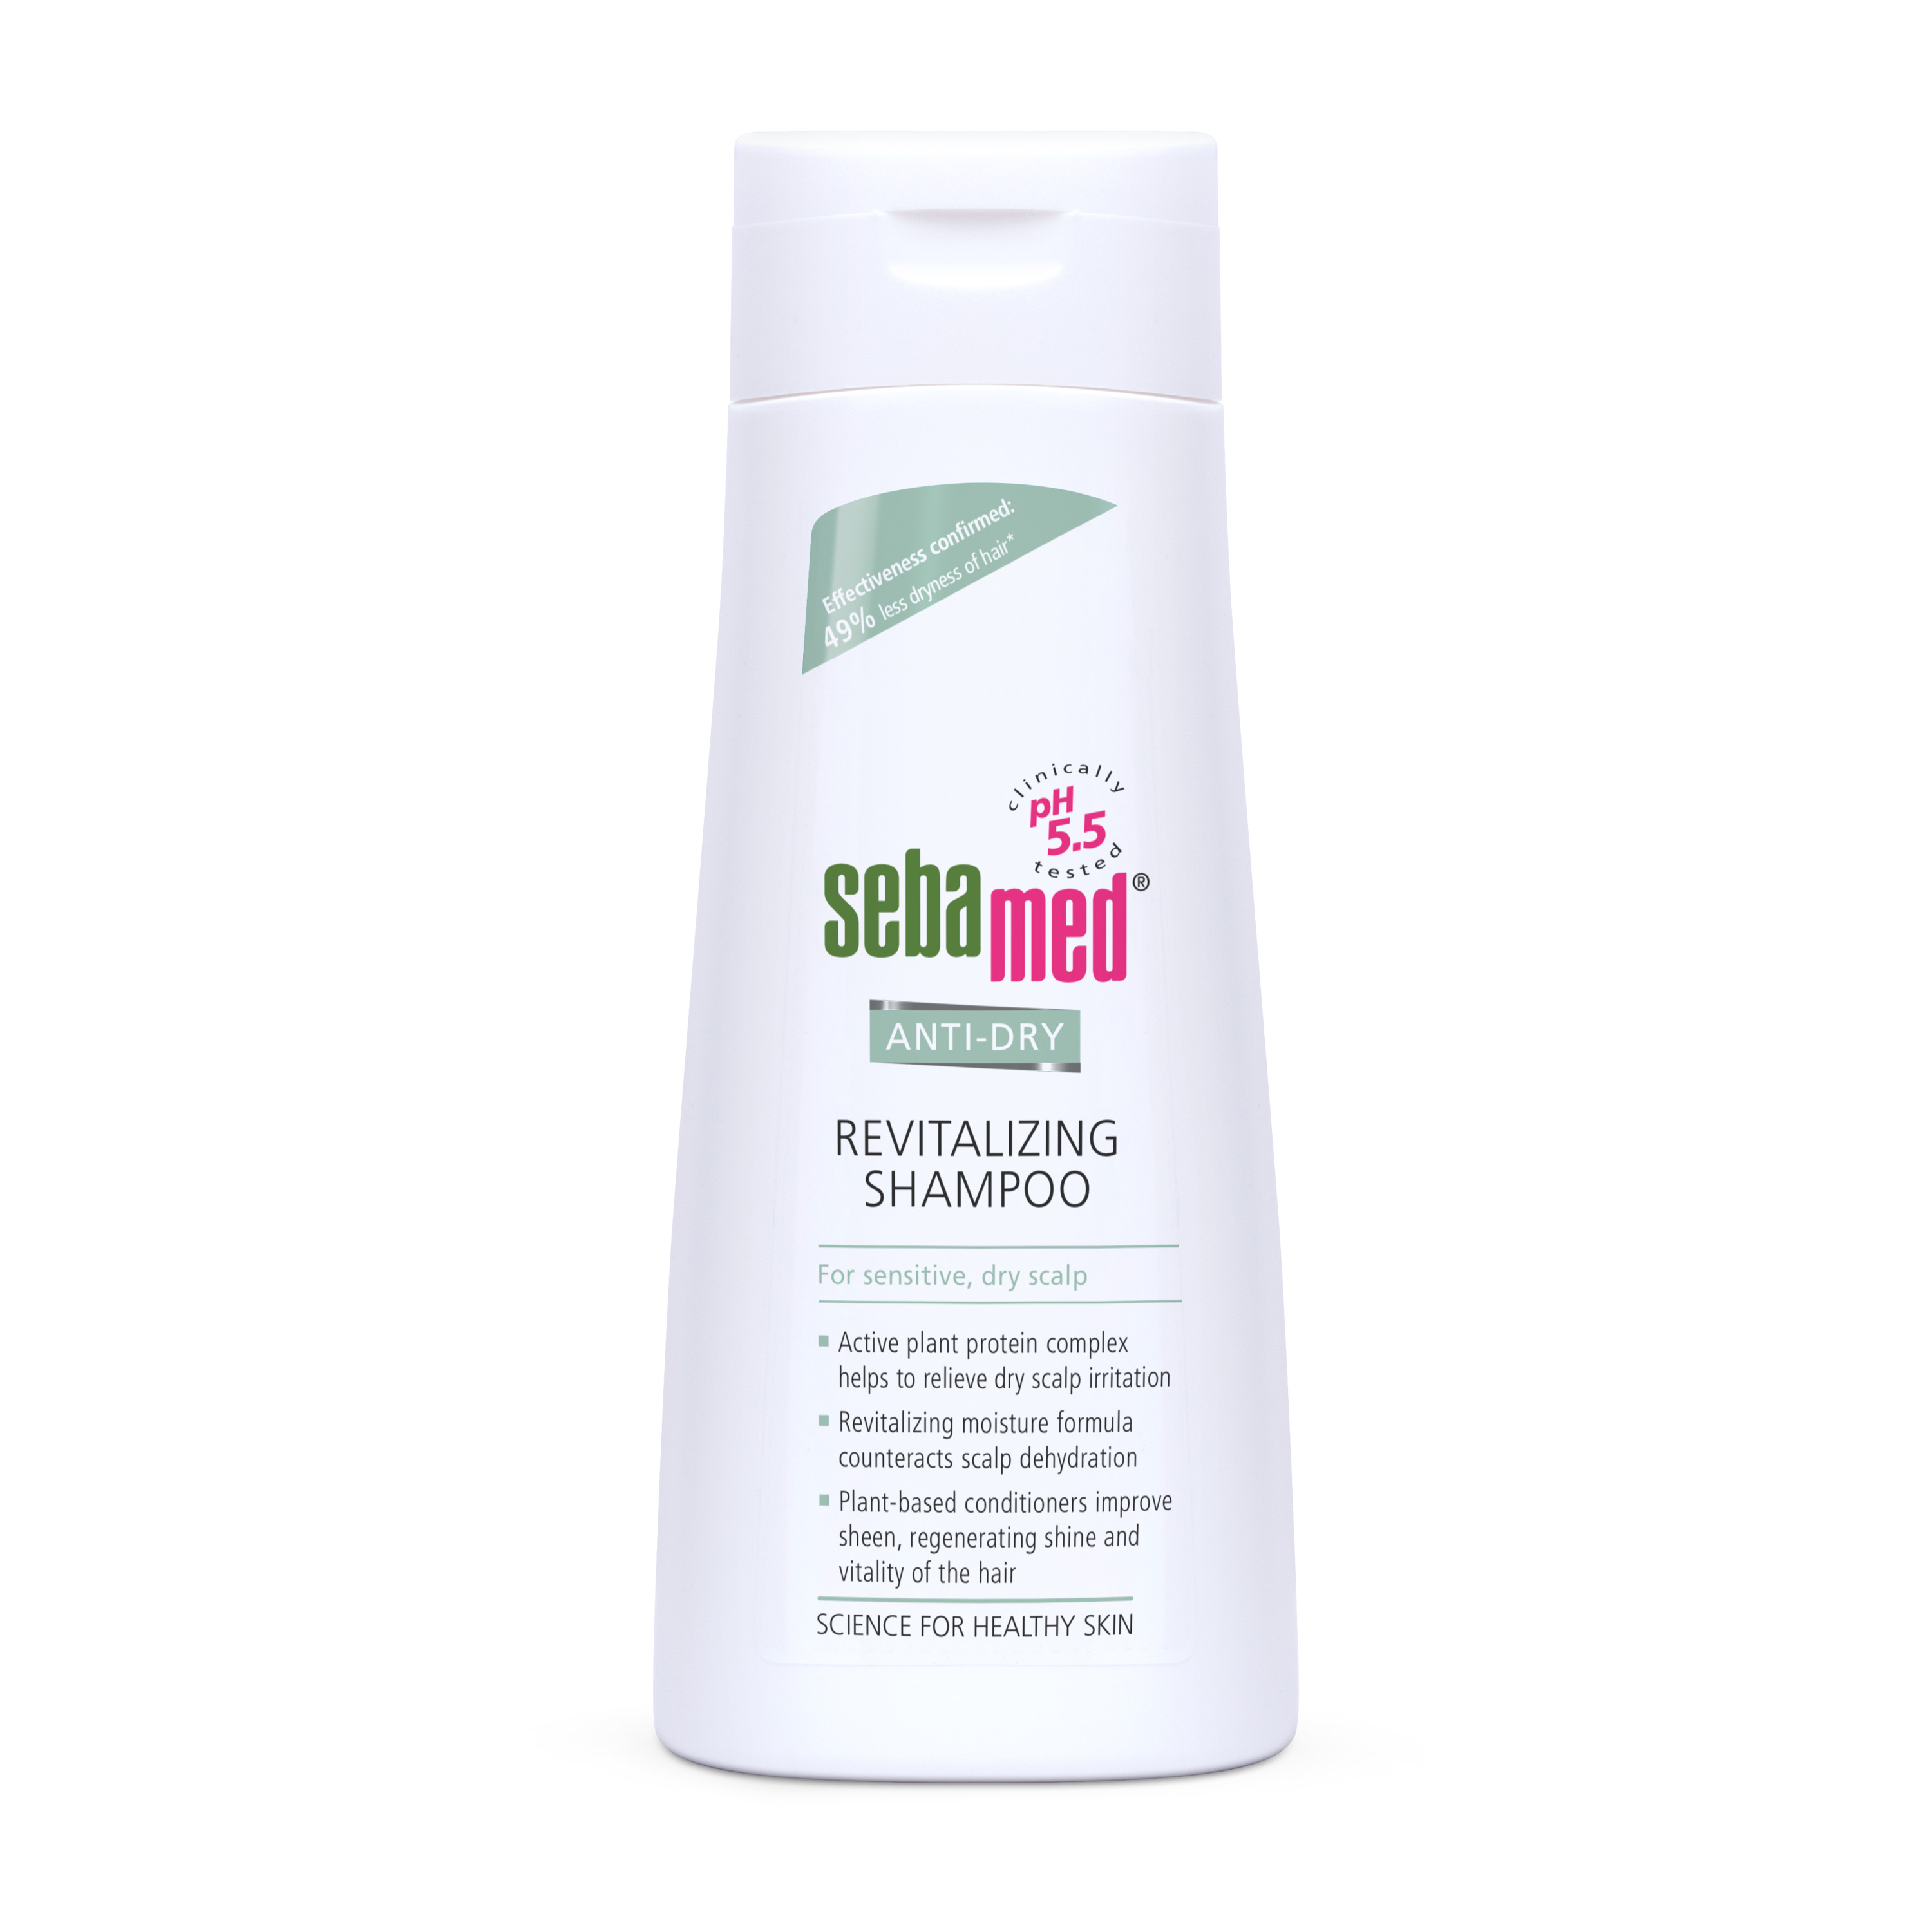 Sebamed Anti-Dry Revitalizing Shampoo 200ml